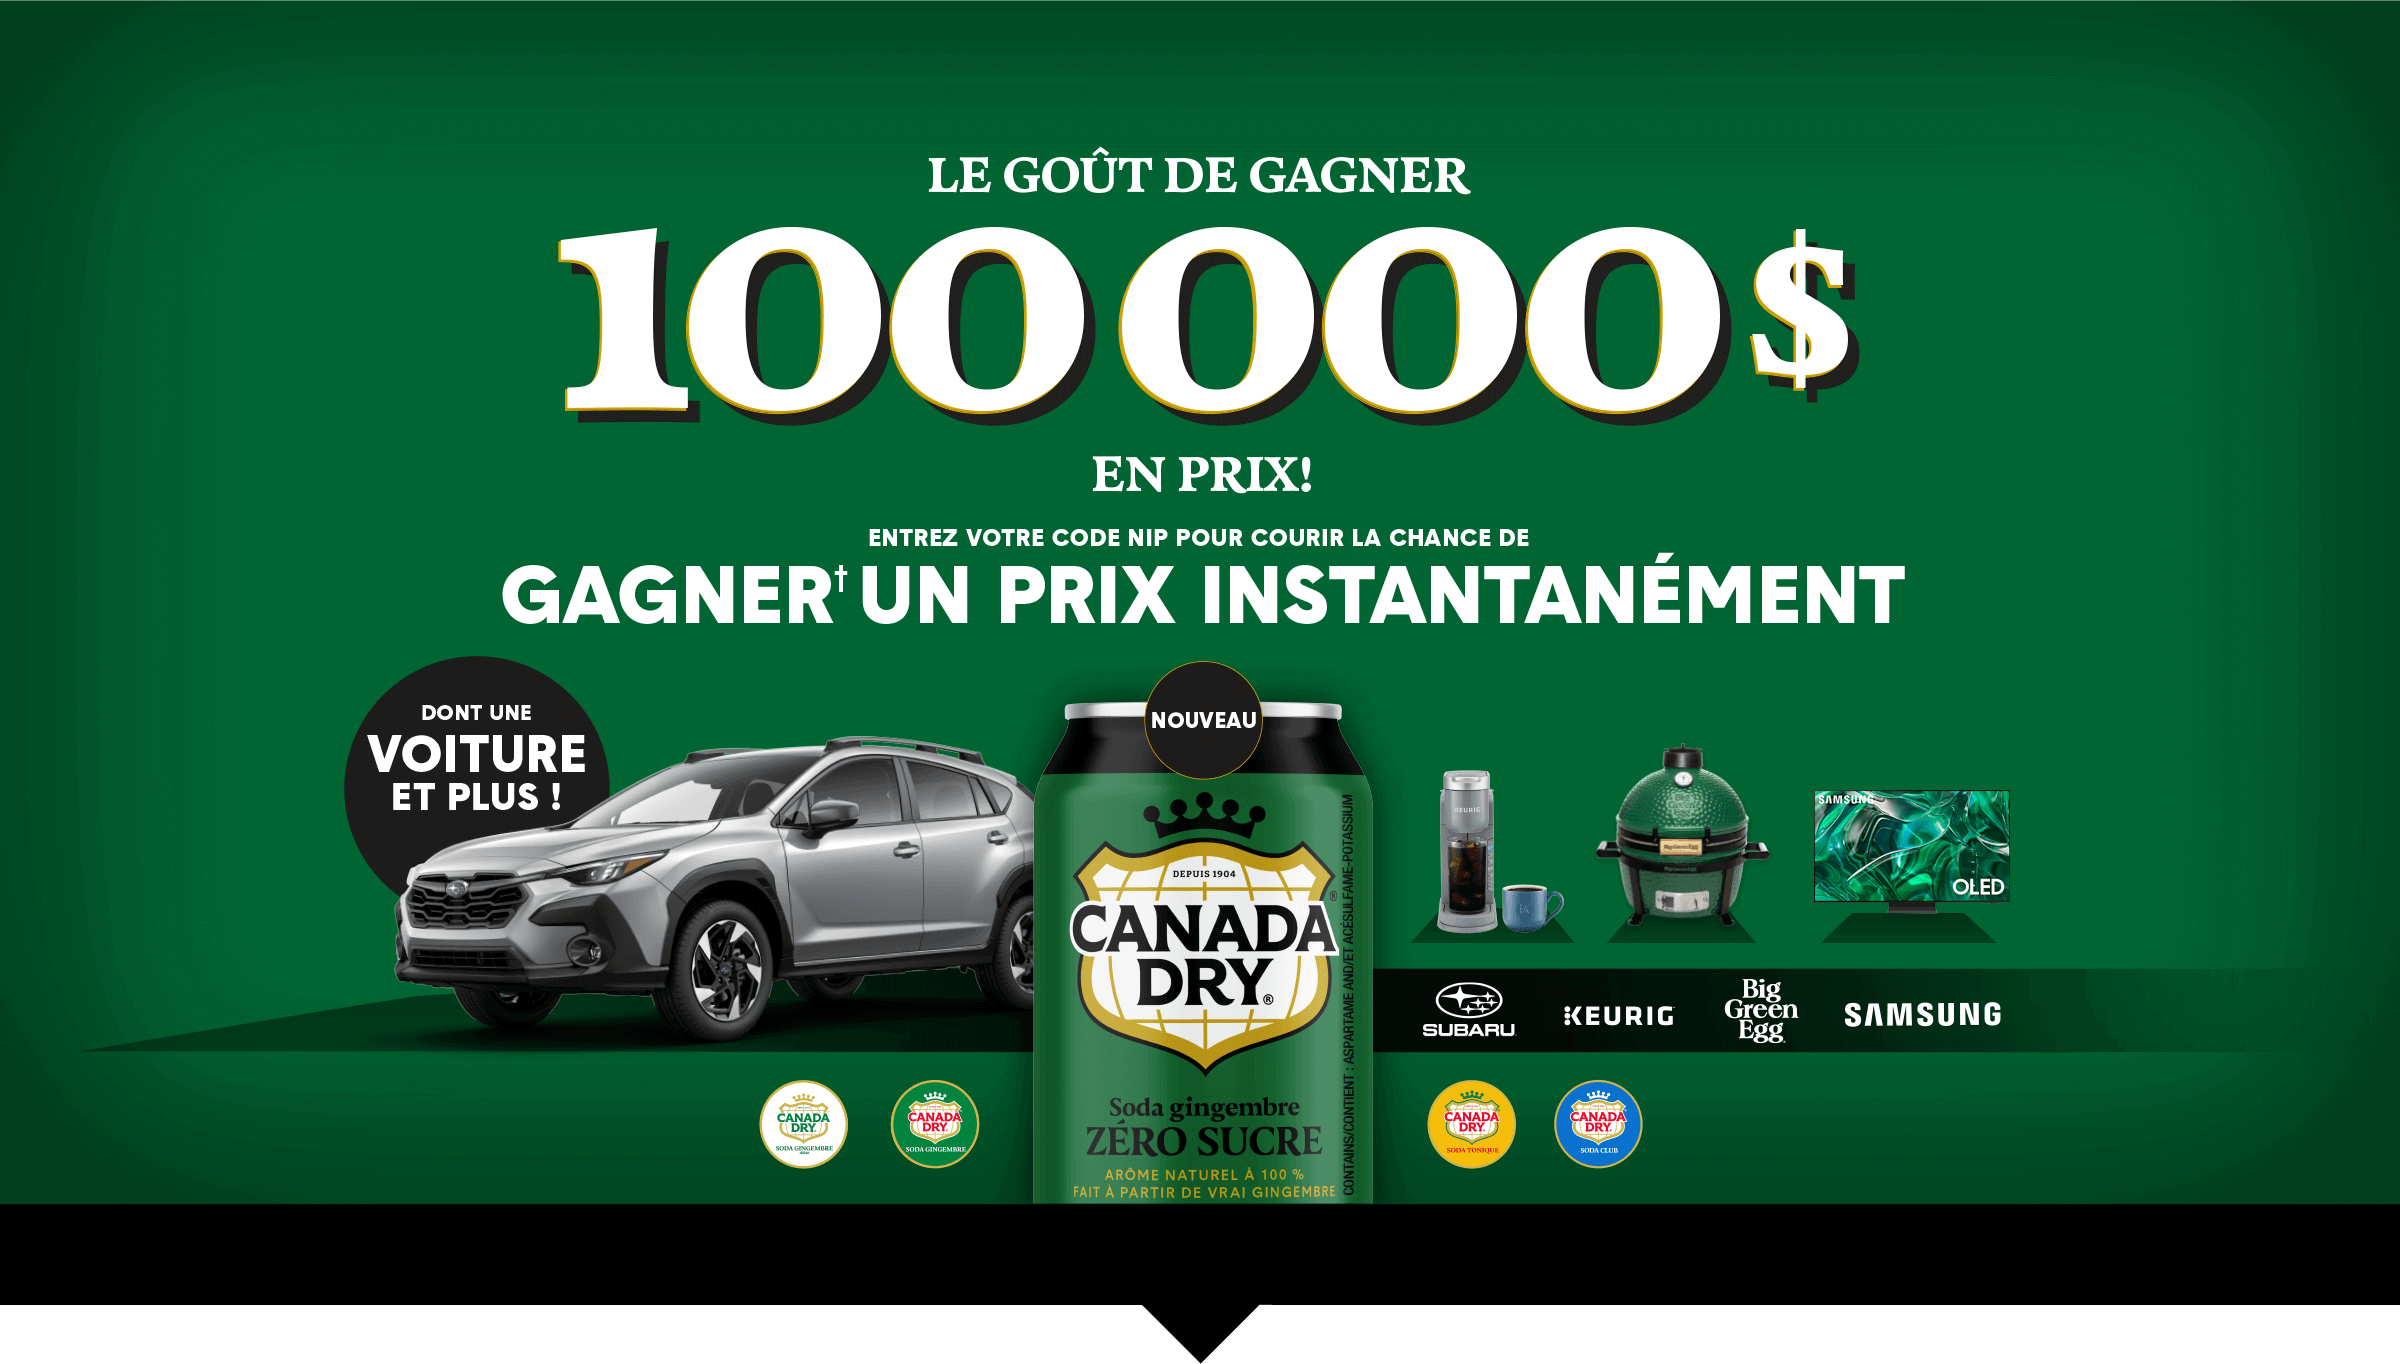 LE GOÛT DE GAGNER 100 000 $ EN PRIX!